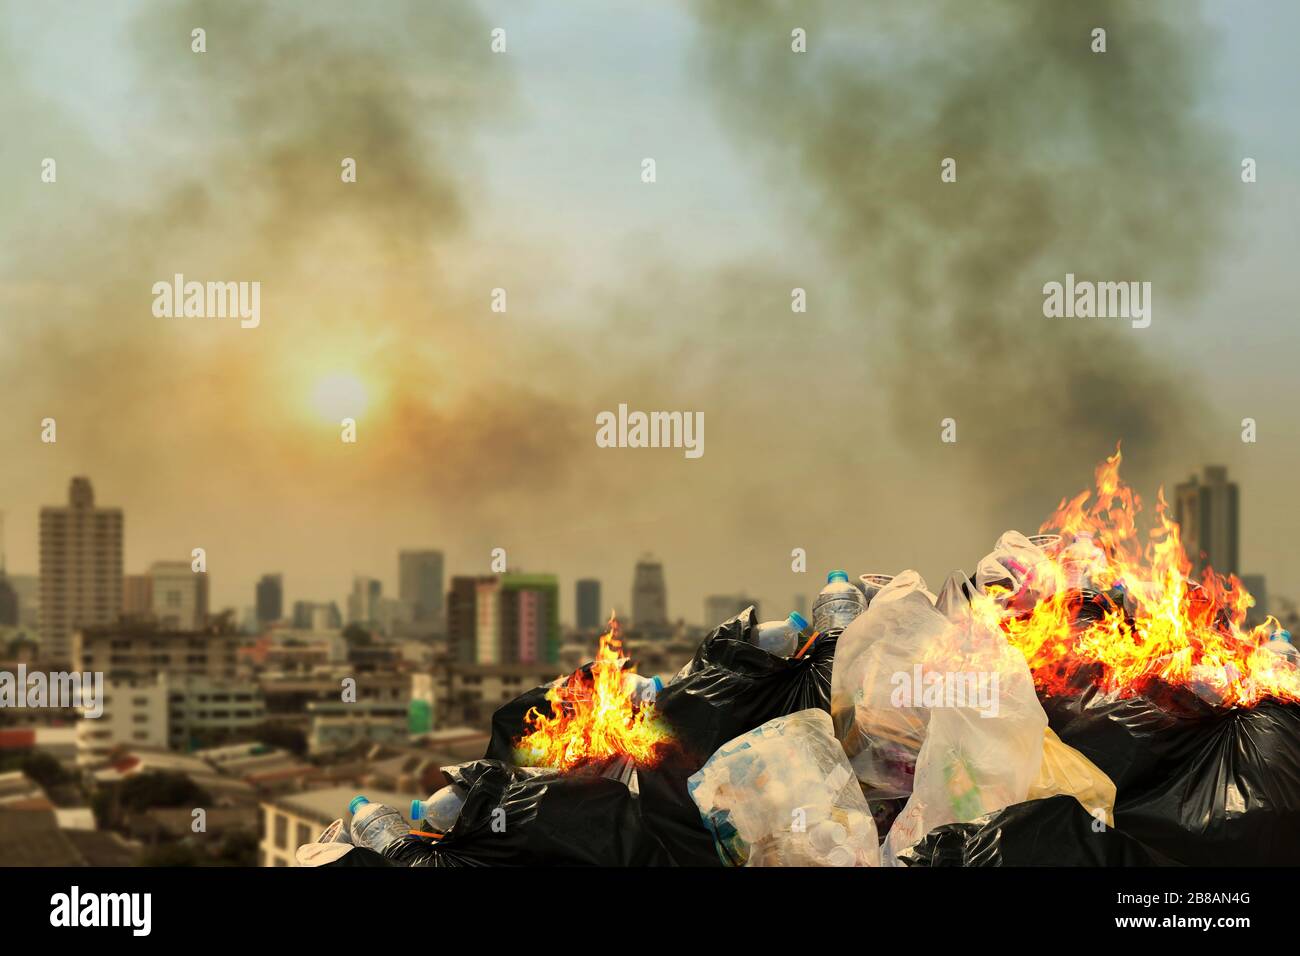 https://c8.alamy.com/comp/2B8AN4G/burn-lot-waste-front-city-community-garbage-bin-pile-dump-lots-of-junk-polluting-burning-heap-smoke-from-burning-pile-garbage-pollution-damage-dust-2B8AN4G.jpg